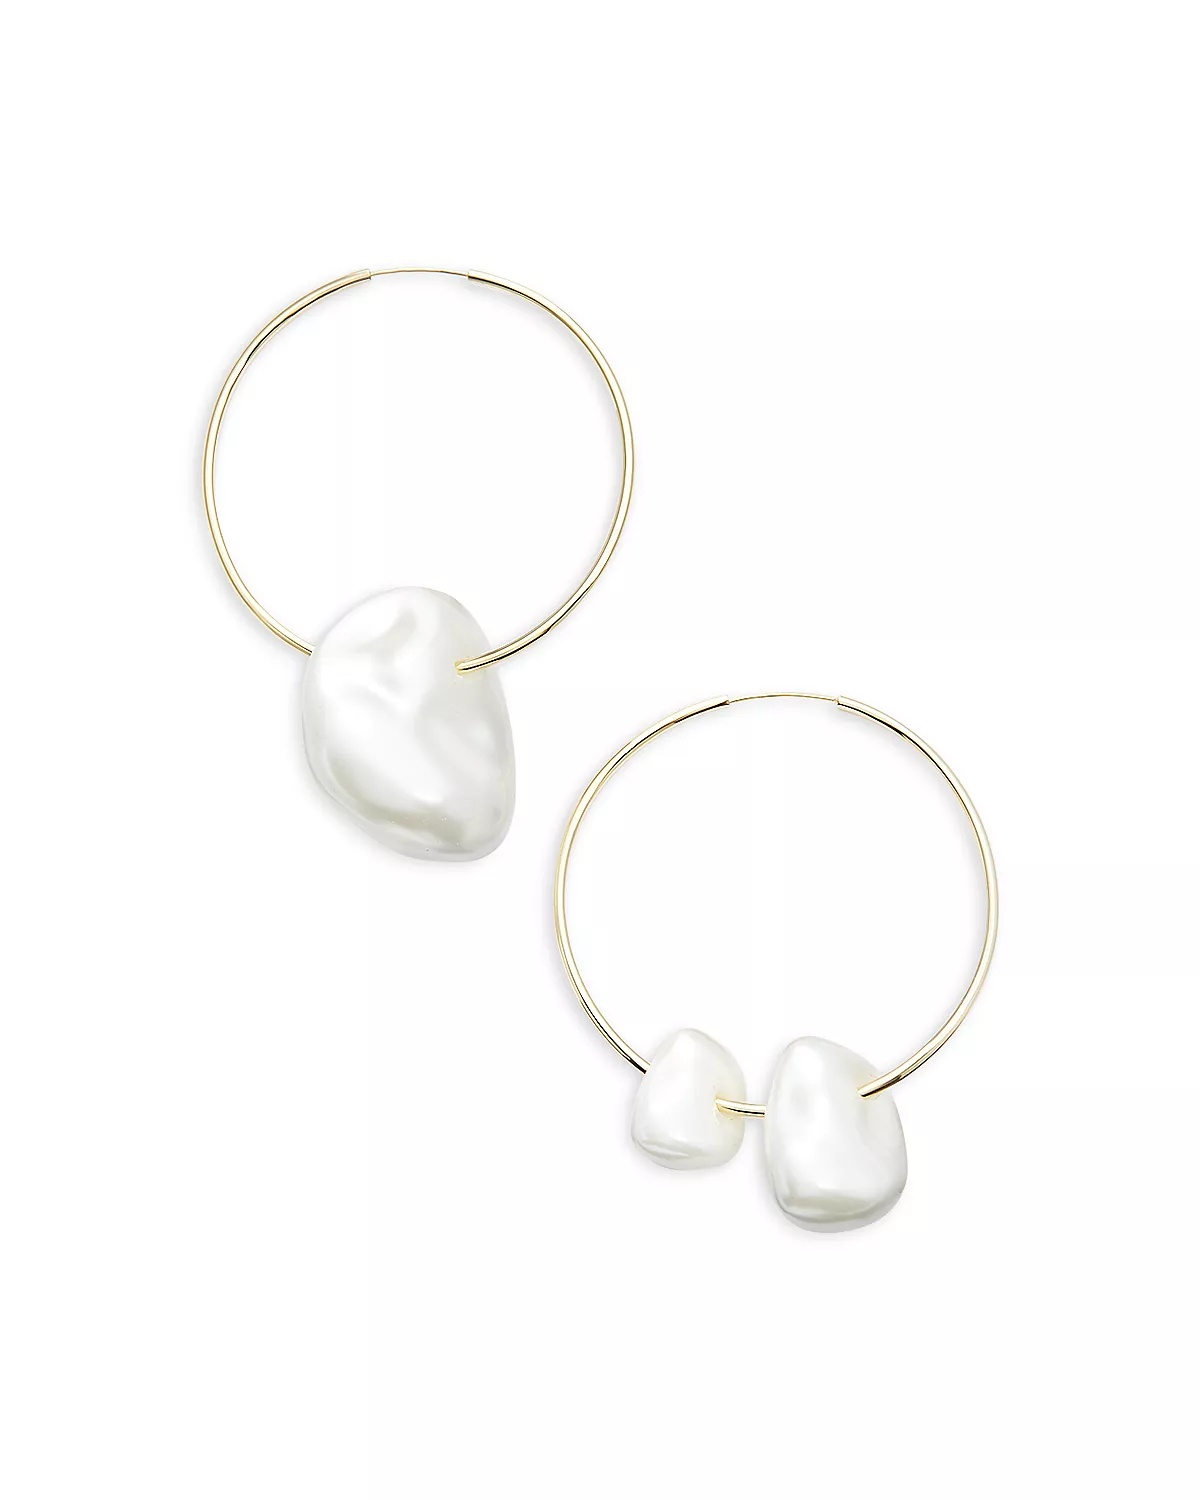 Juno Cultured Freshwater Pearl Charm Hoop Earrings in Gold Tone - 1